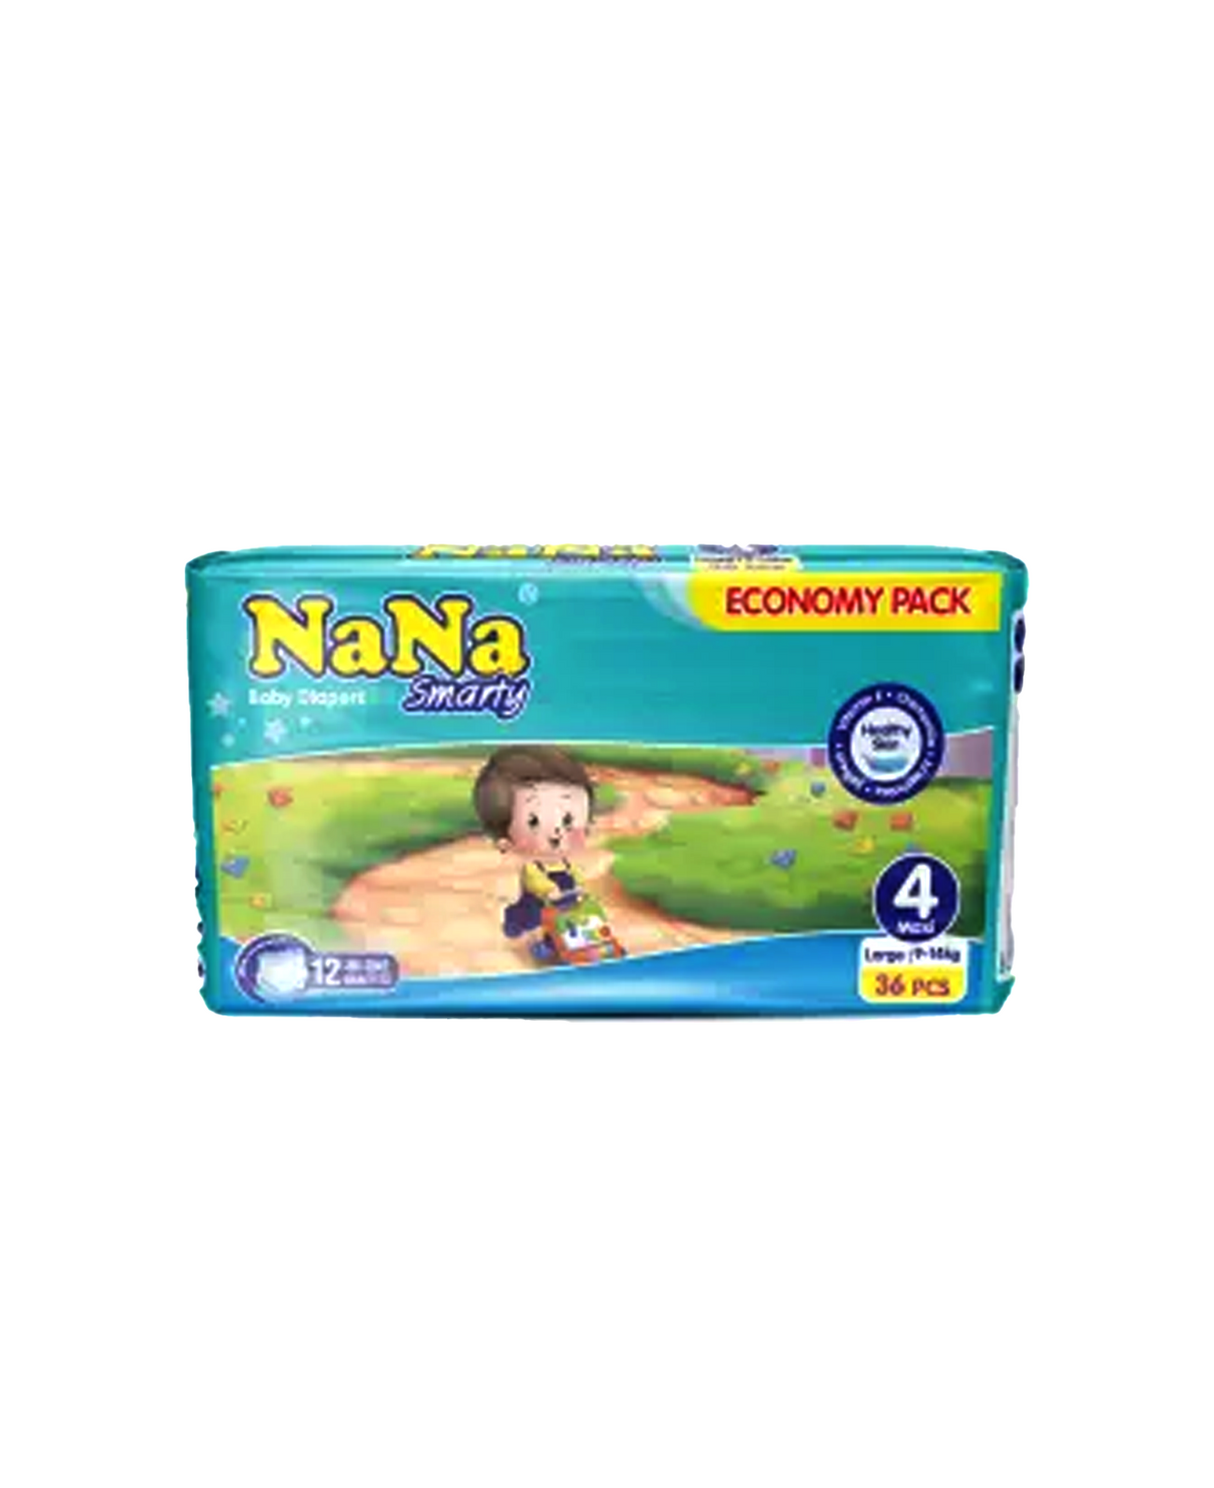 nana diapers economy l4 36pc